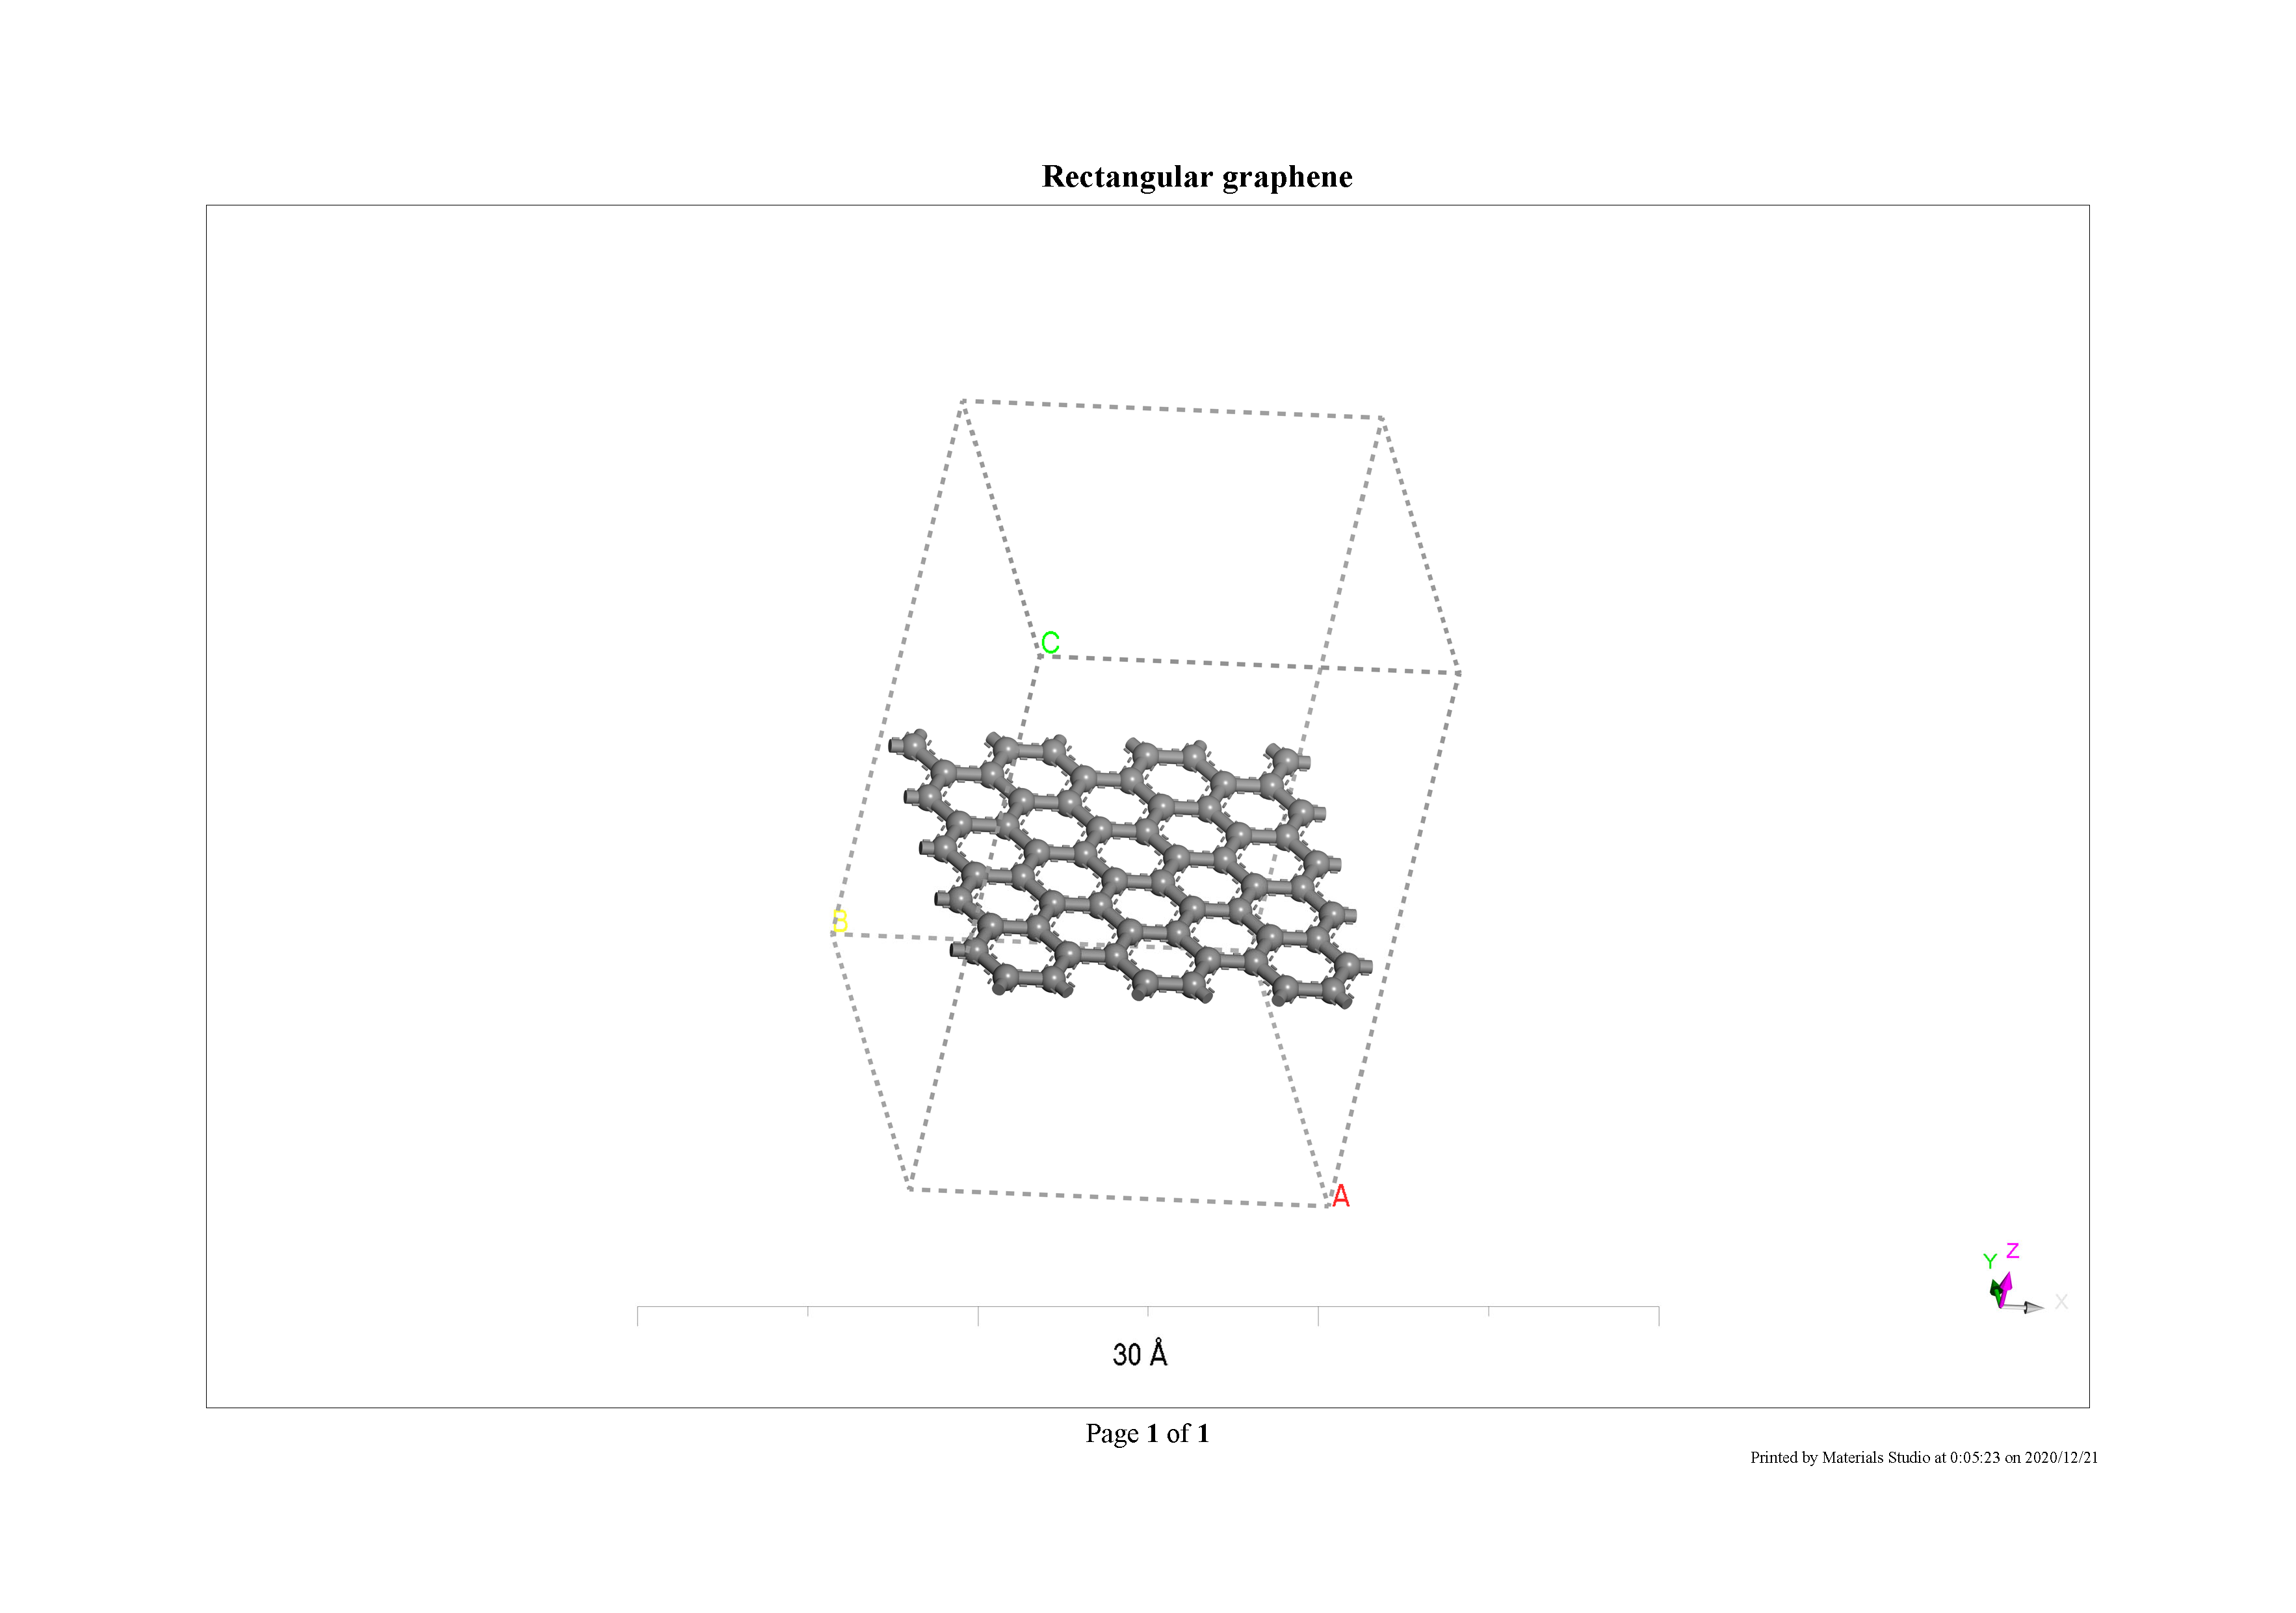 Rectangular graphene 2